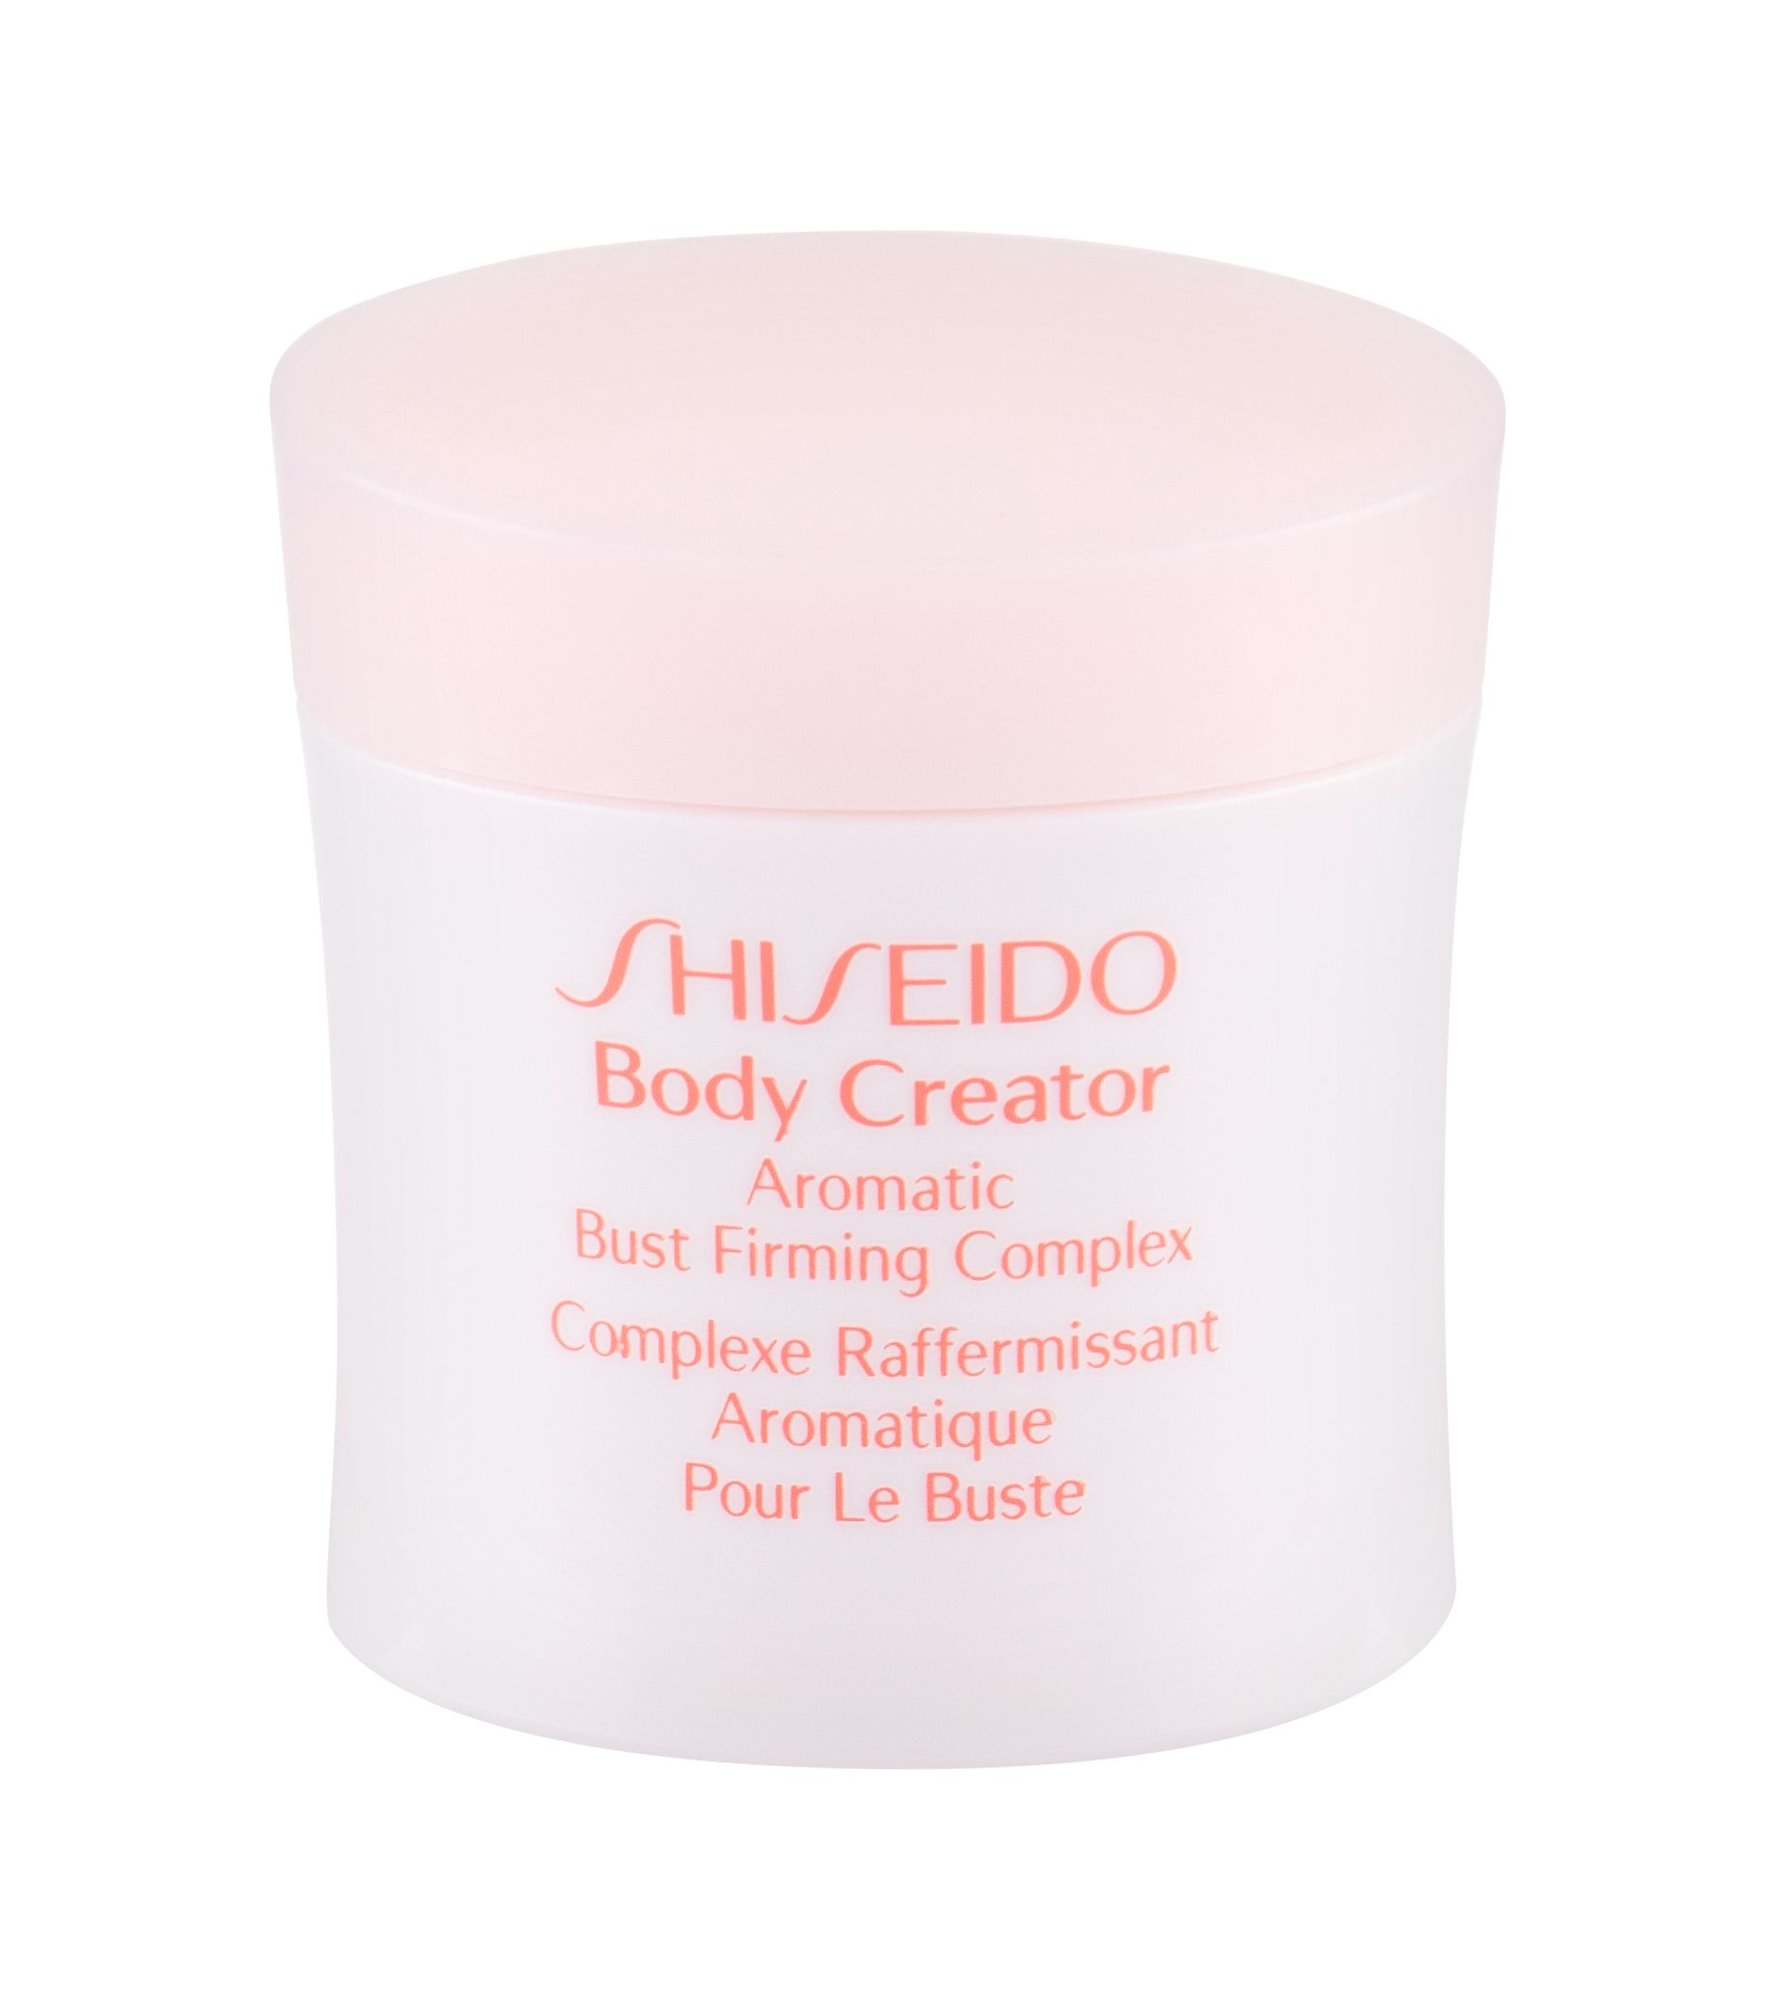 Shiseido BODY CREATOR Aromatic Bust Firming Complex 75ml Moterims Bust Cream